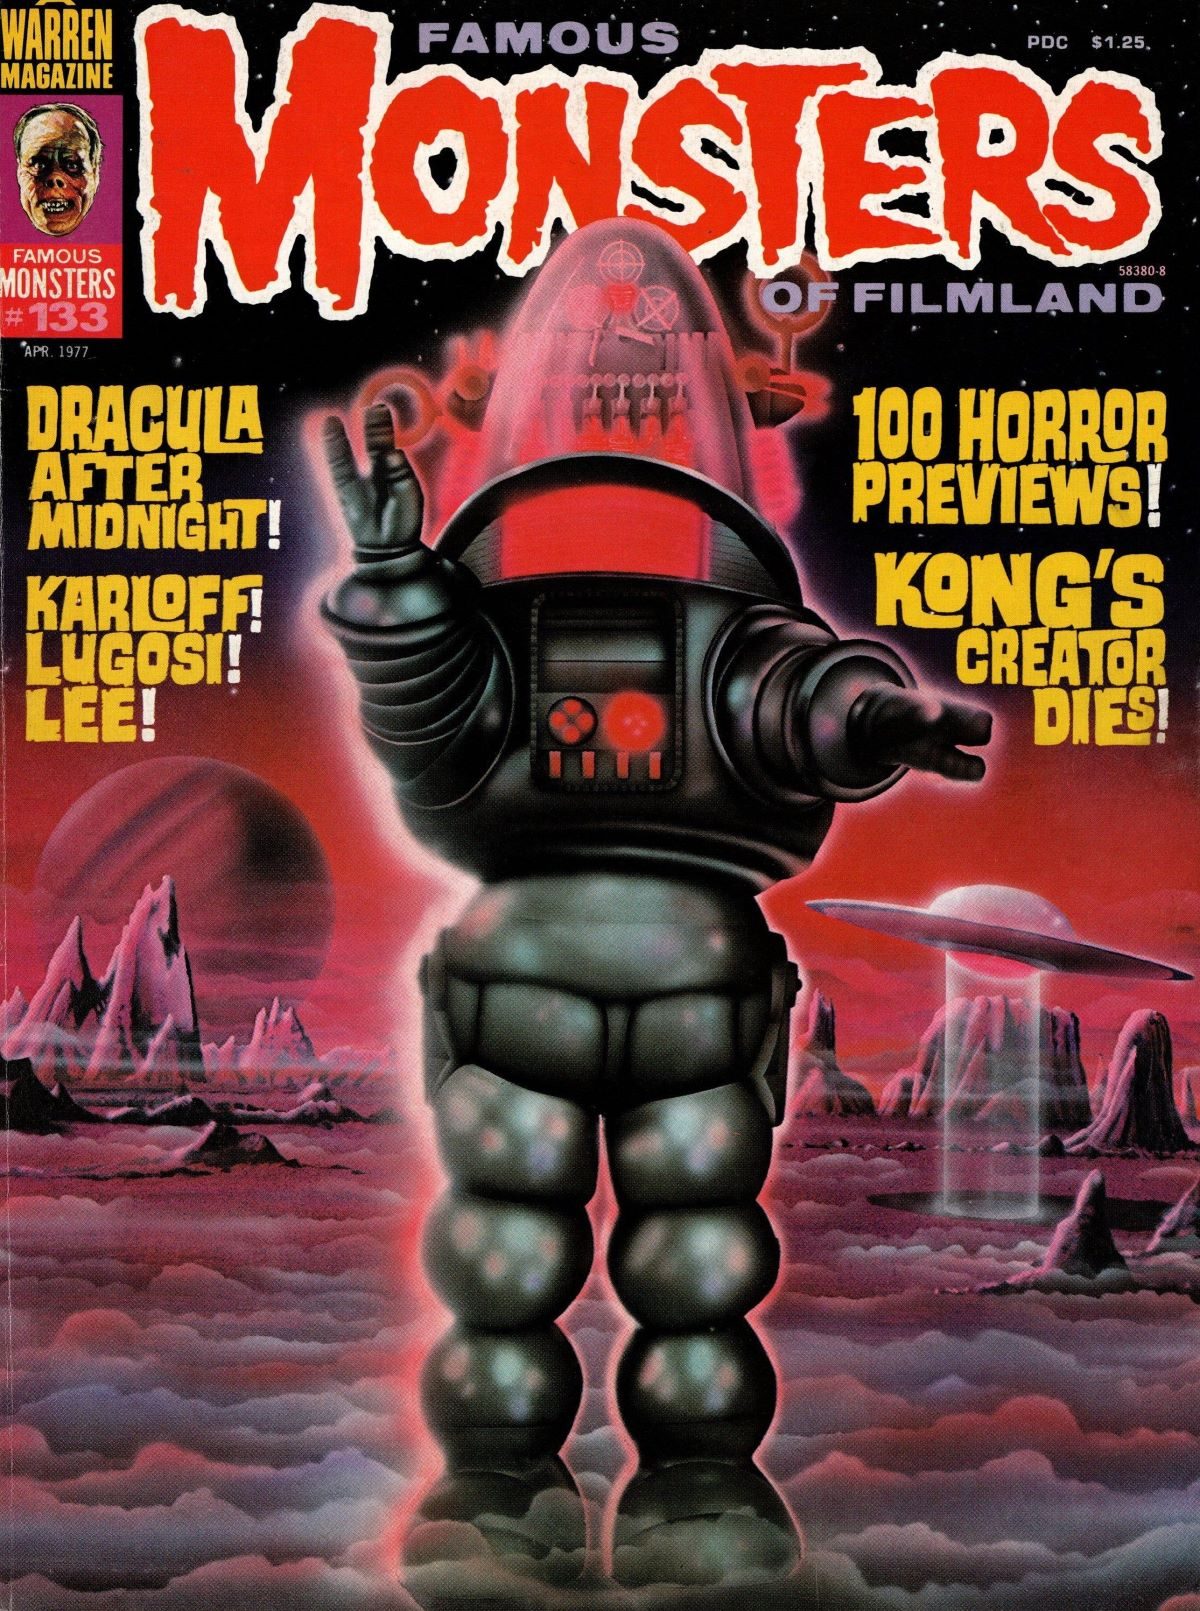 Famous Monsters of Filmland, magazine, horror films, Robbie The Robot